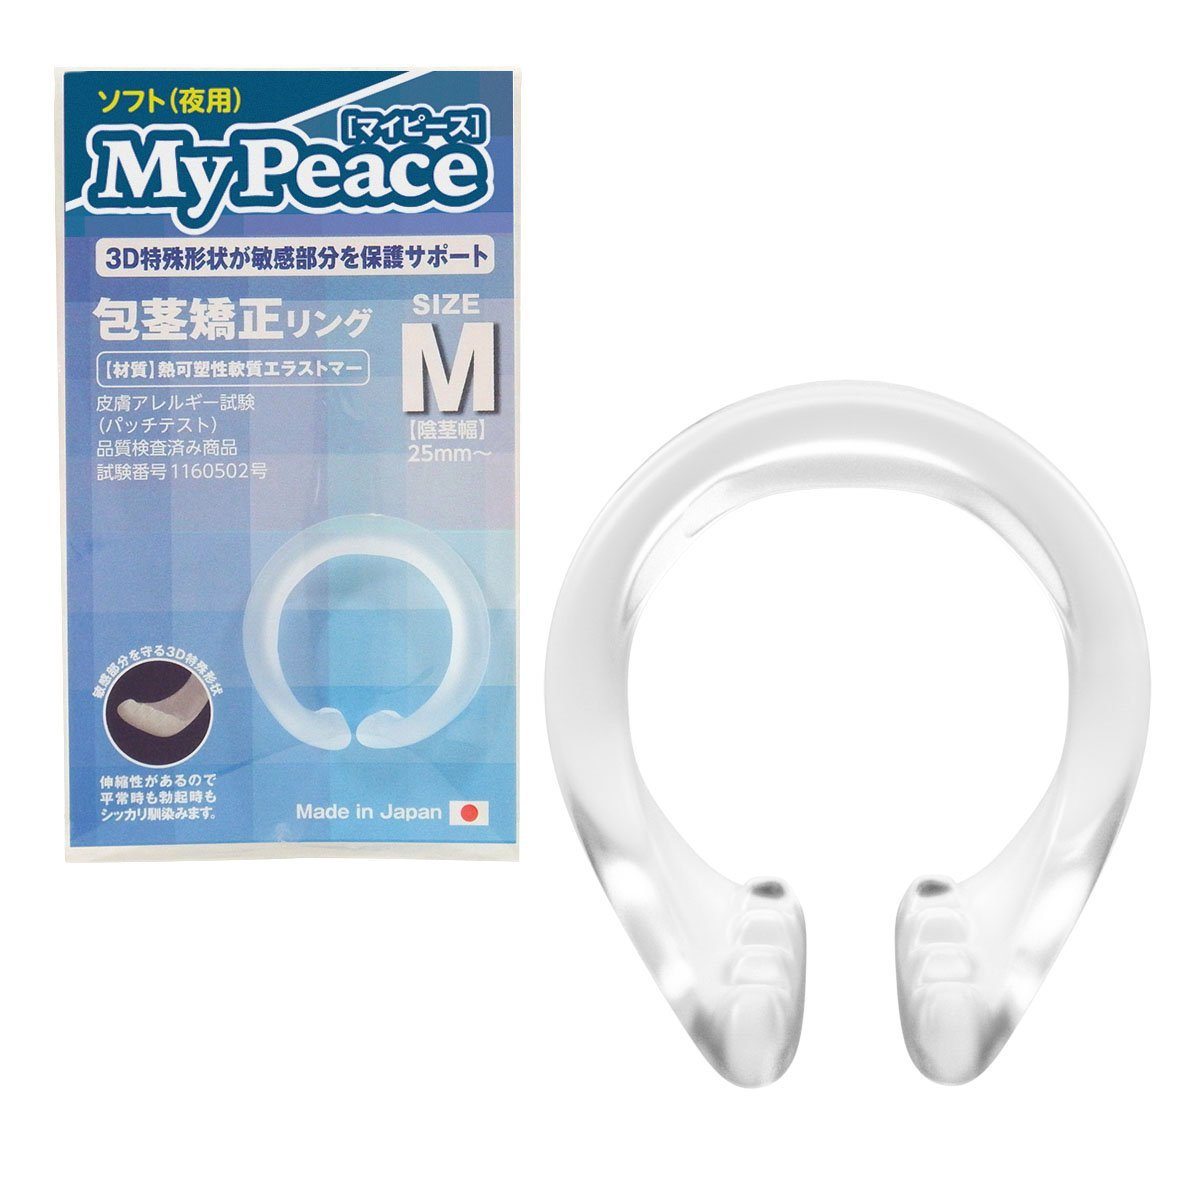 SSI JAPAN My Peace Soft 夜用標準版包莖矯正環 包莖矯正環 M 購買